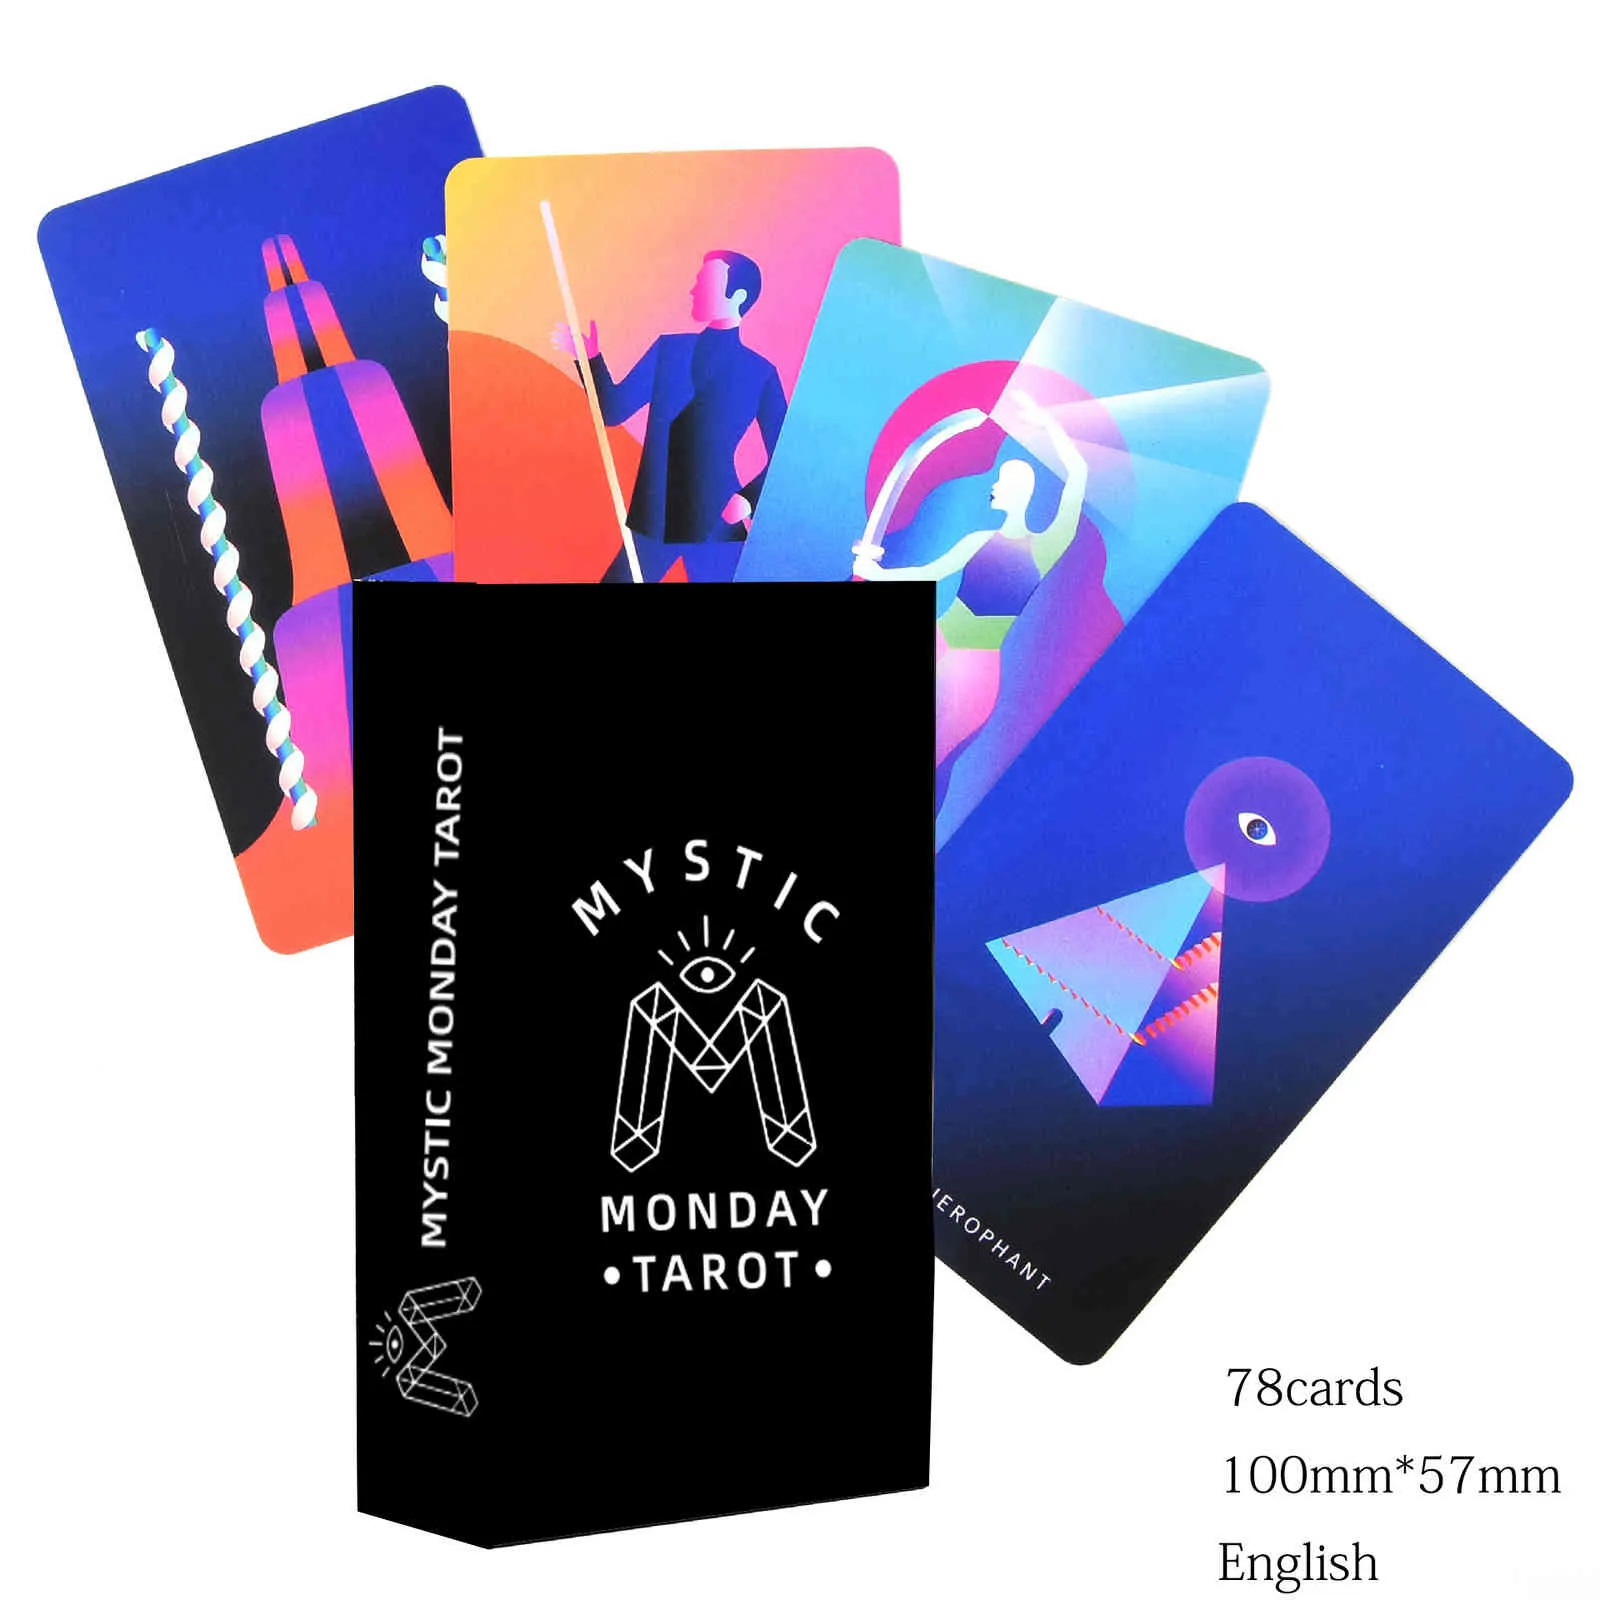 Mystic Mondays Tarot Cards Deck pour débutants Ot Party Game Mystical Divination With Guid Card Gifts saleXJKU